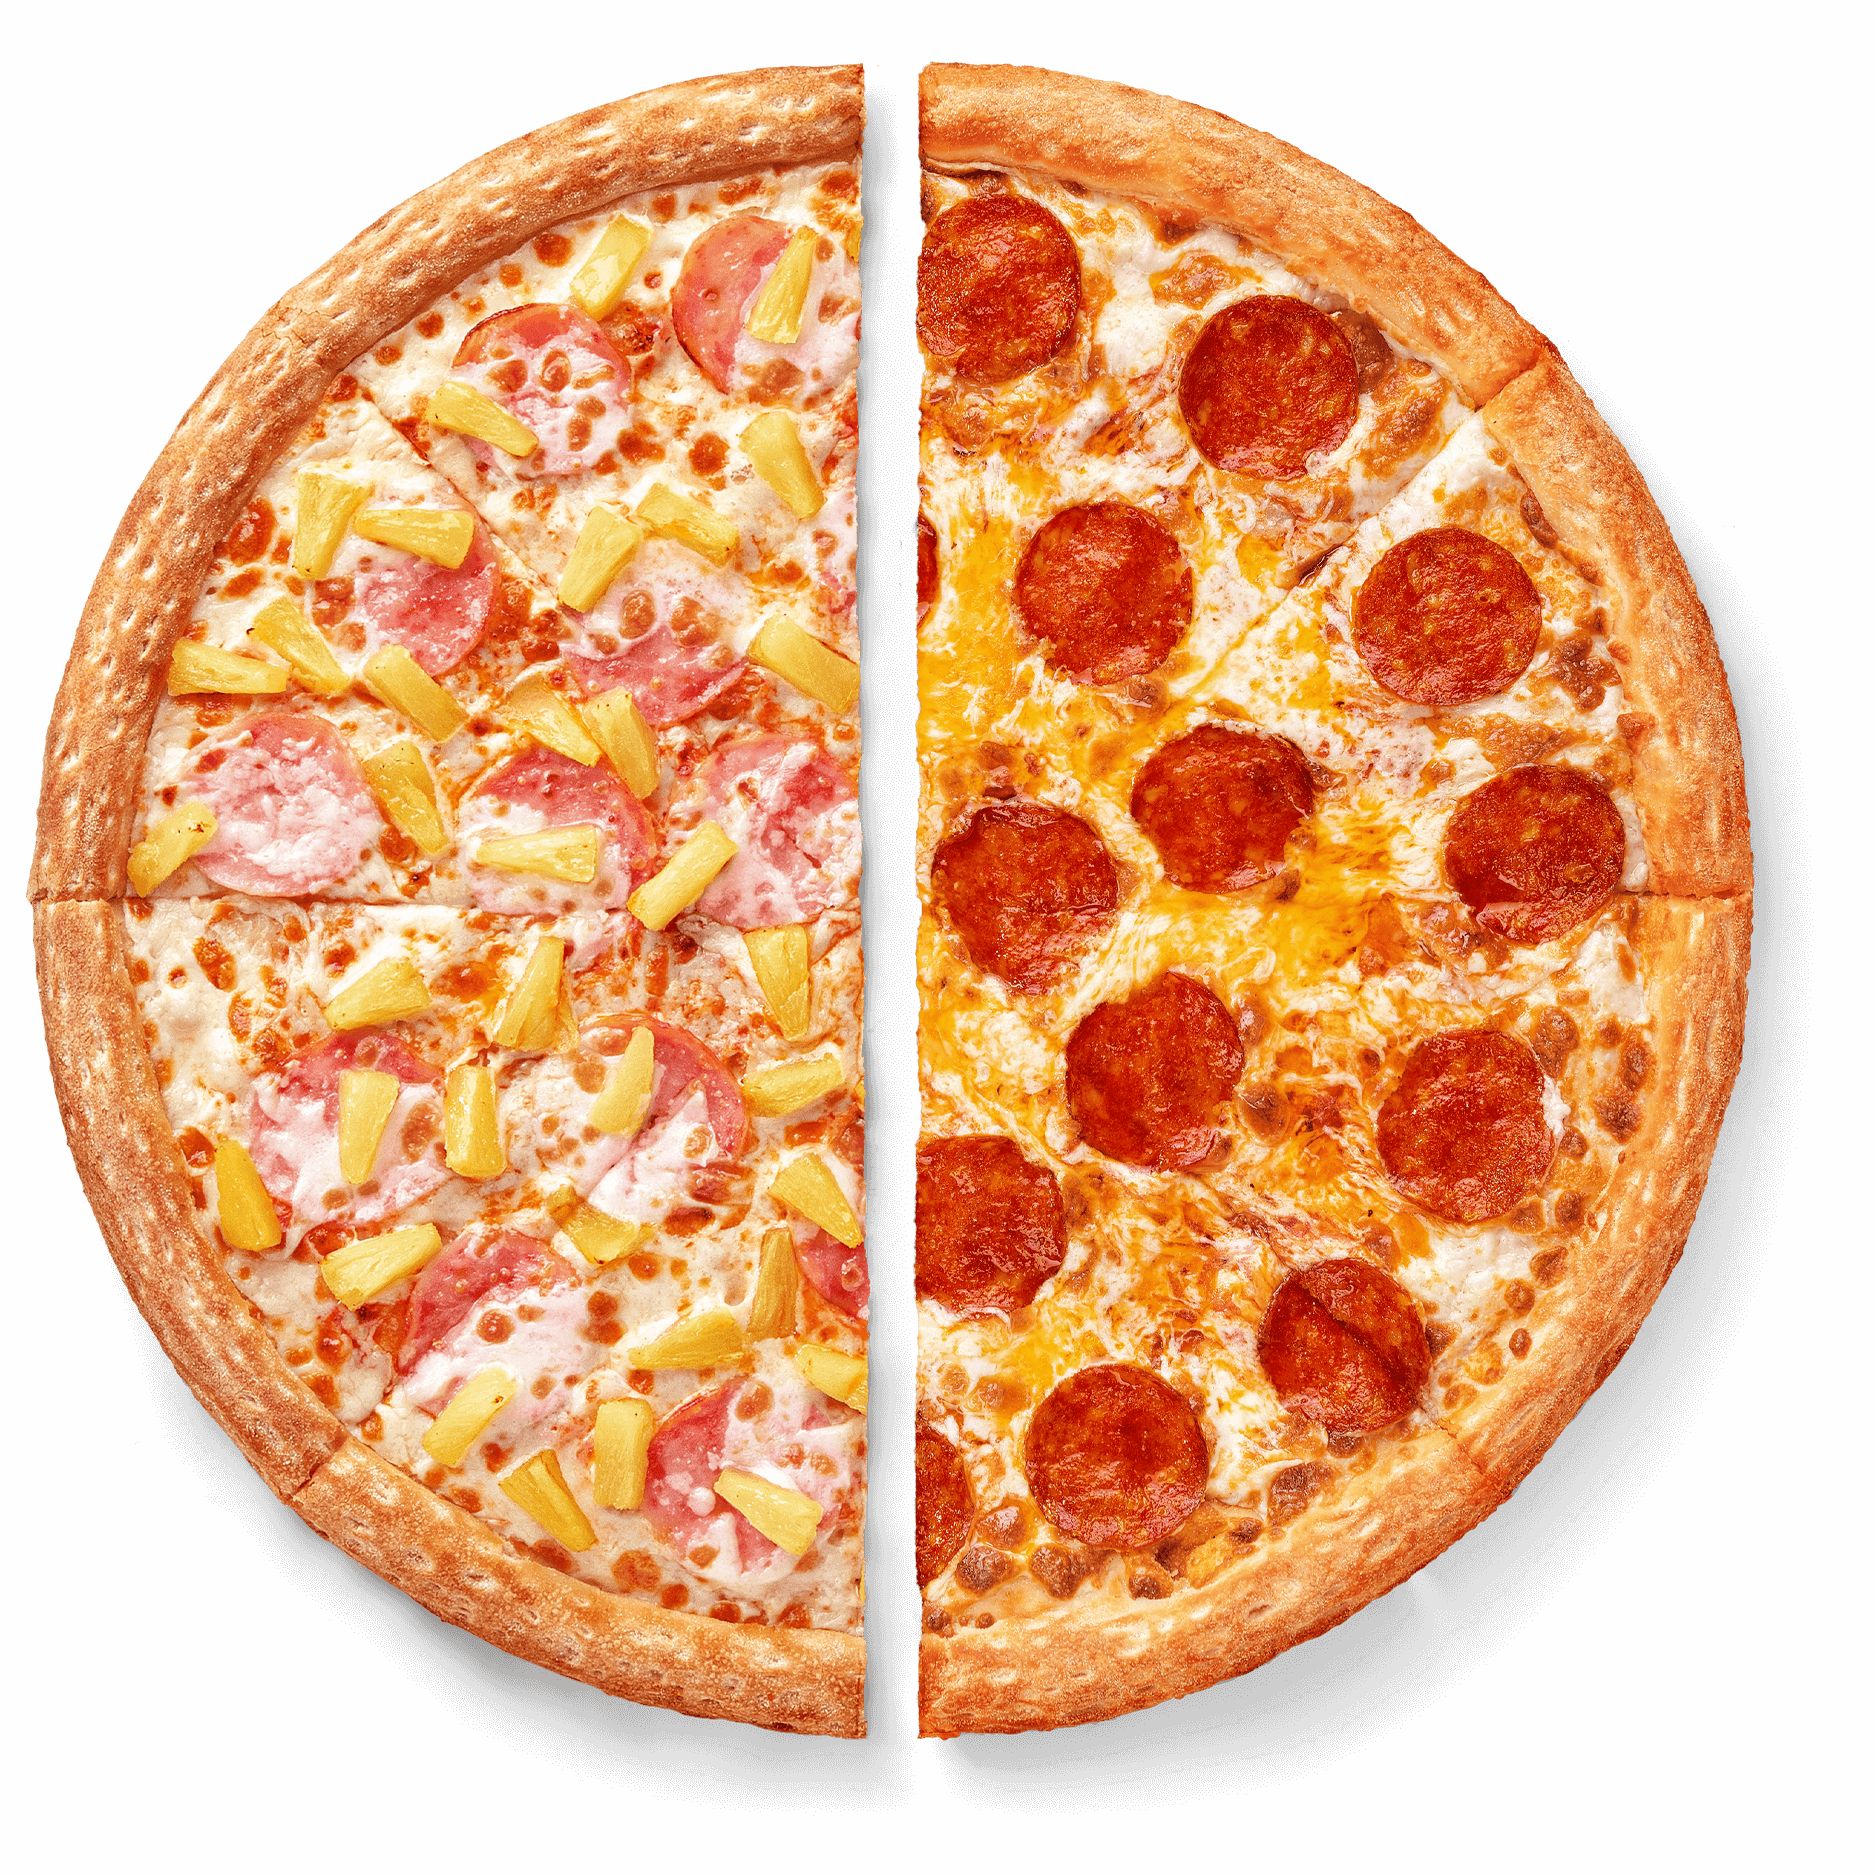 сколько стоит пицца пепперони в среднем фото 64